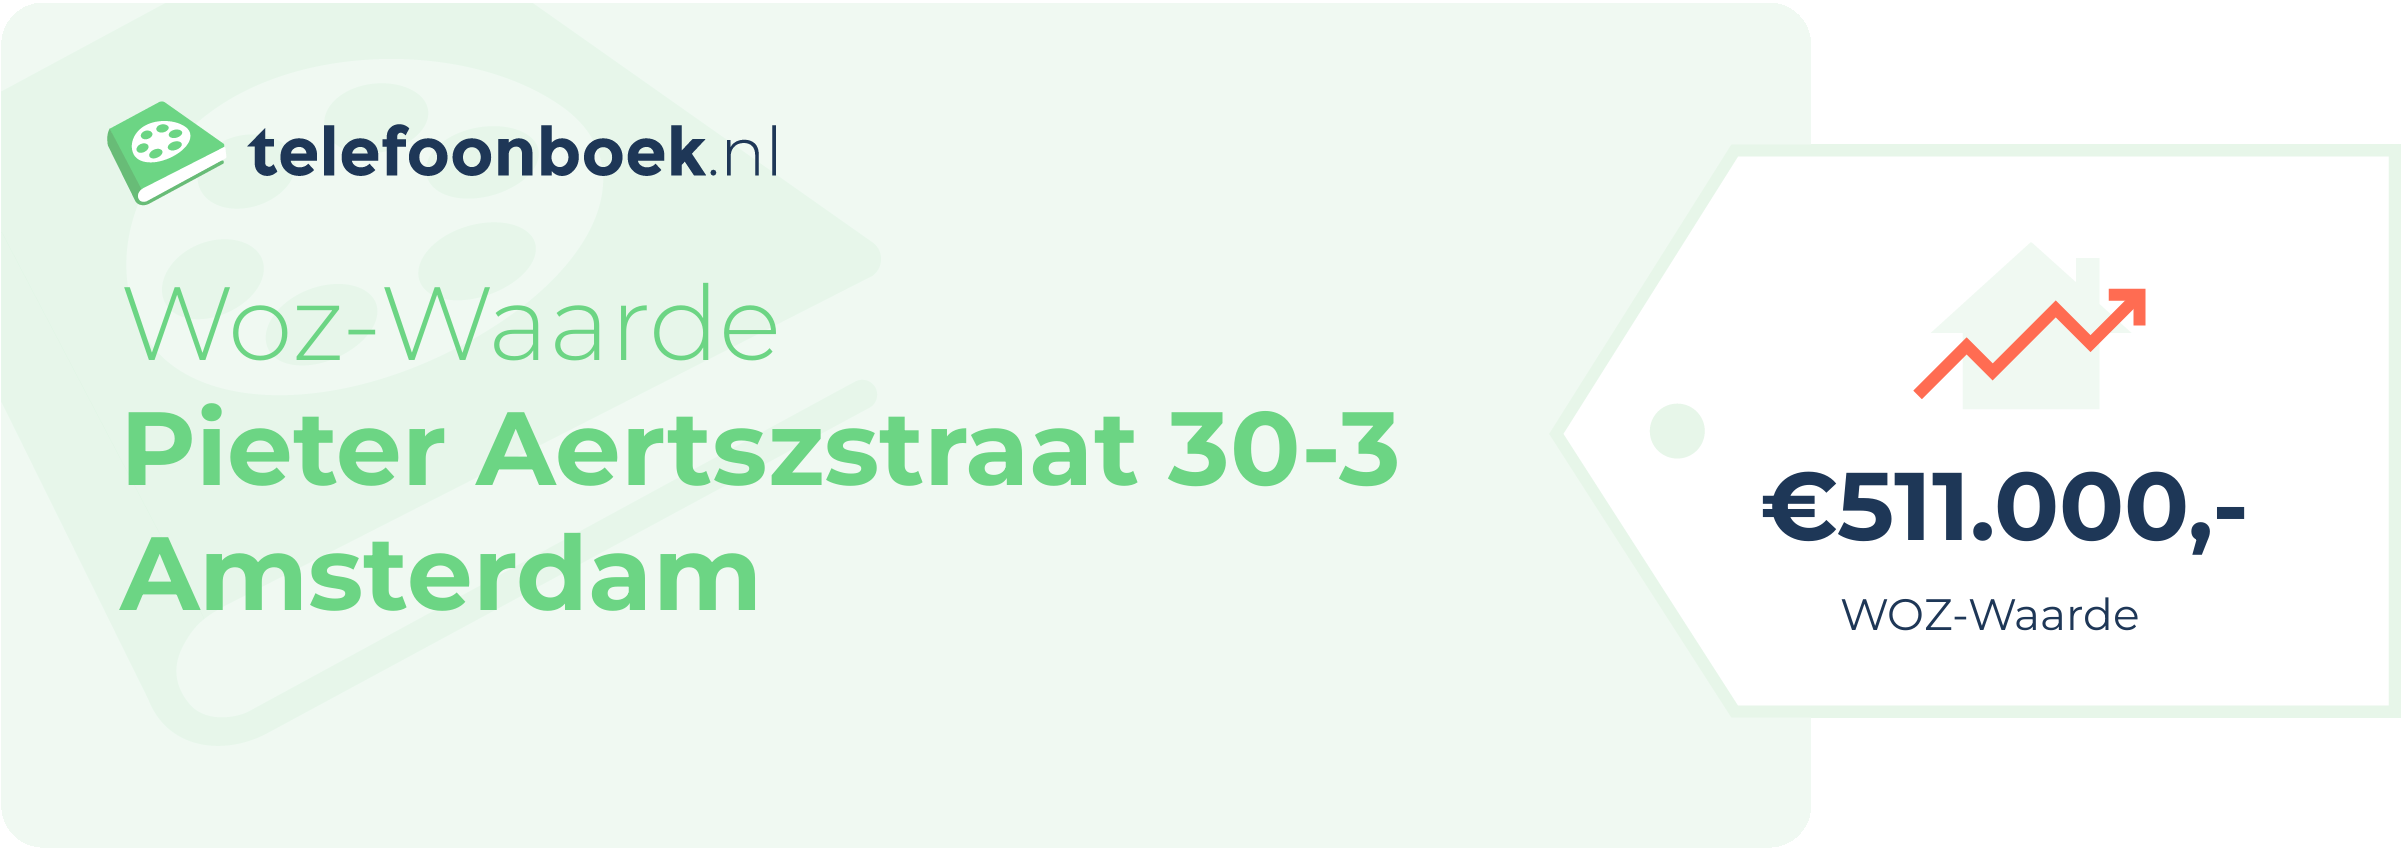 WOZ-waarde Pieter Aertszstraat 30-3 Amsterdam